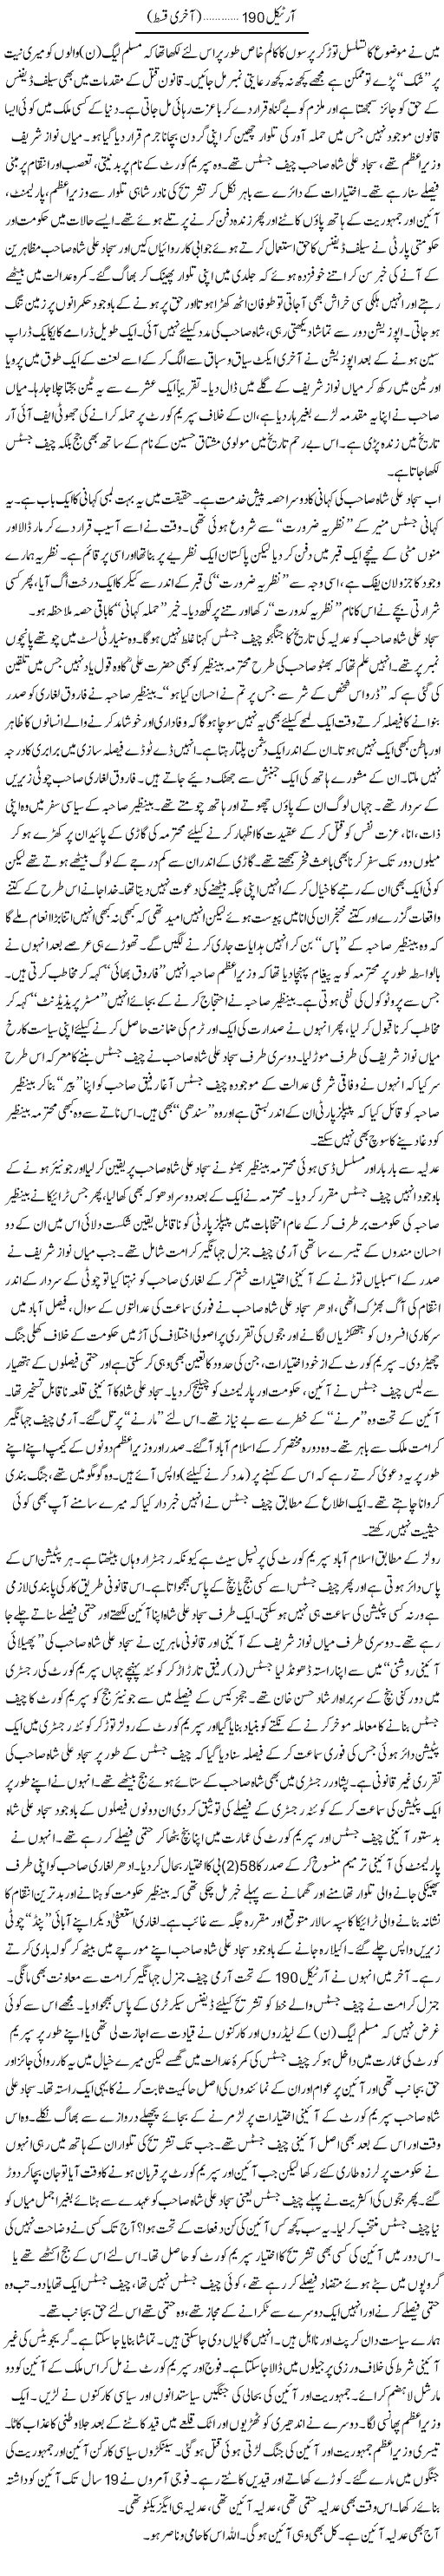 Article 190 Express Column Abbas Athar 21 August 2011